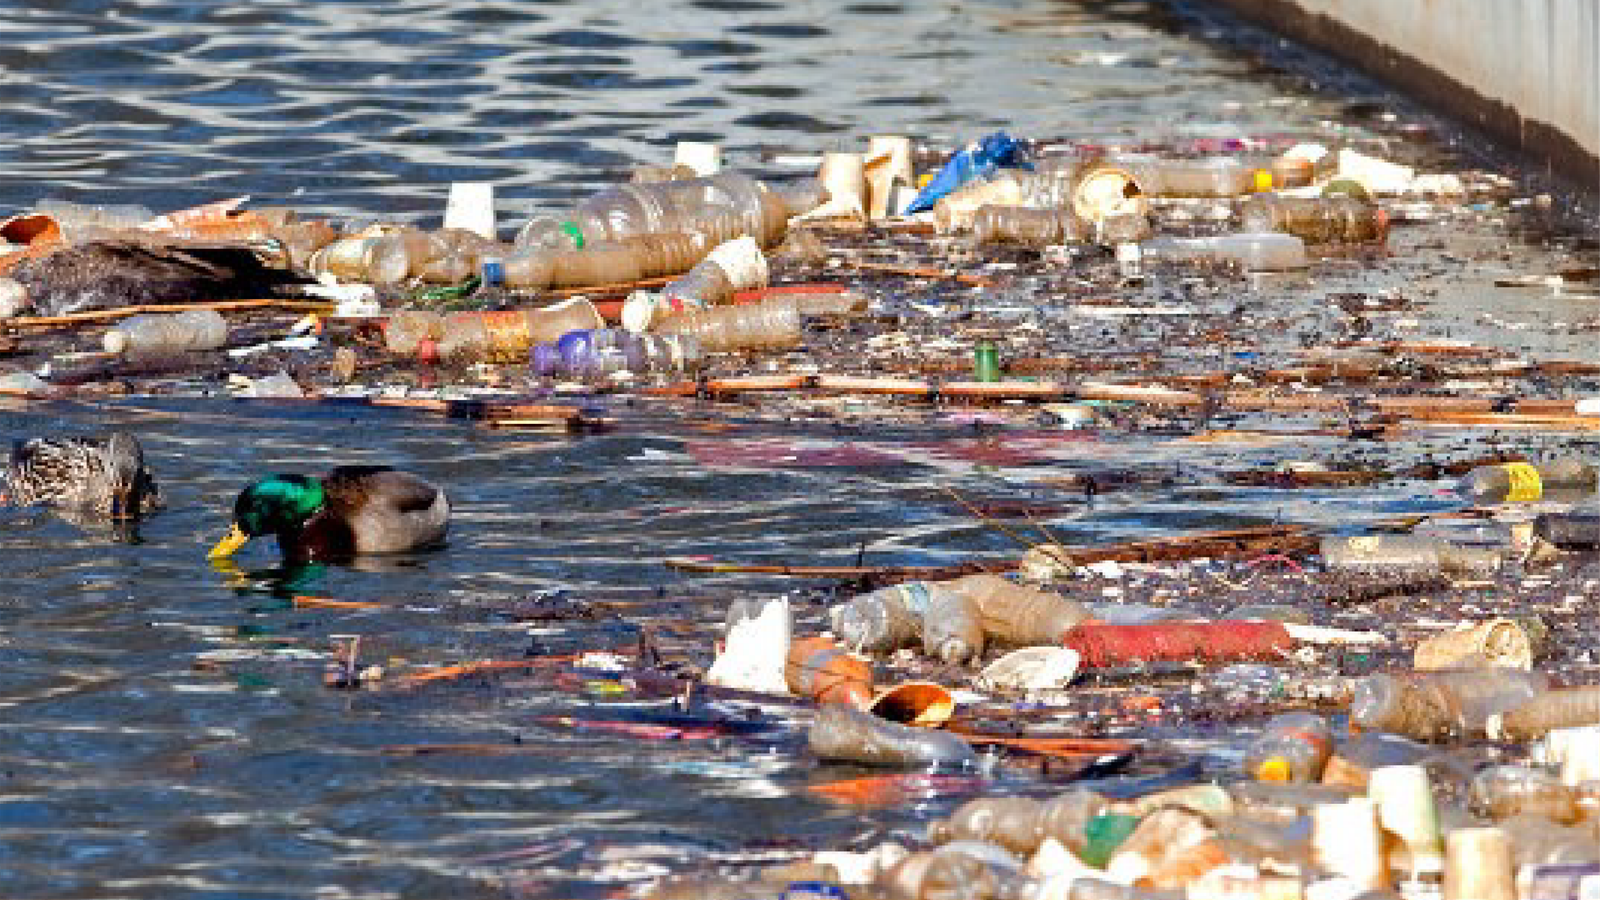 New York state sues PepsiCo over plastic pollution in Buffalo River